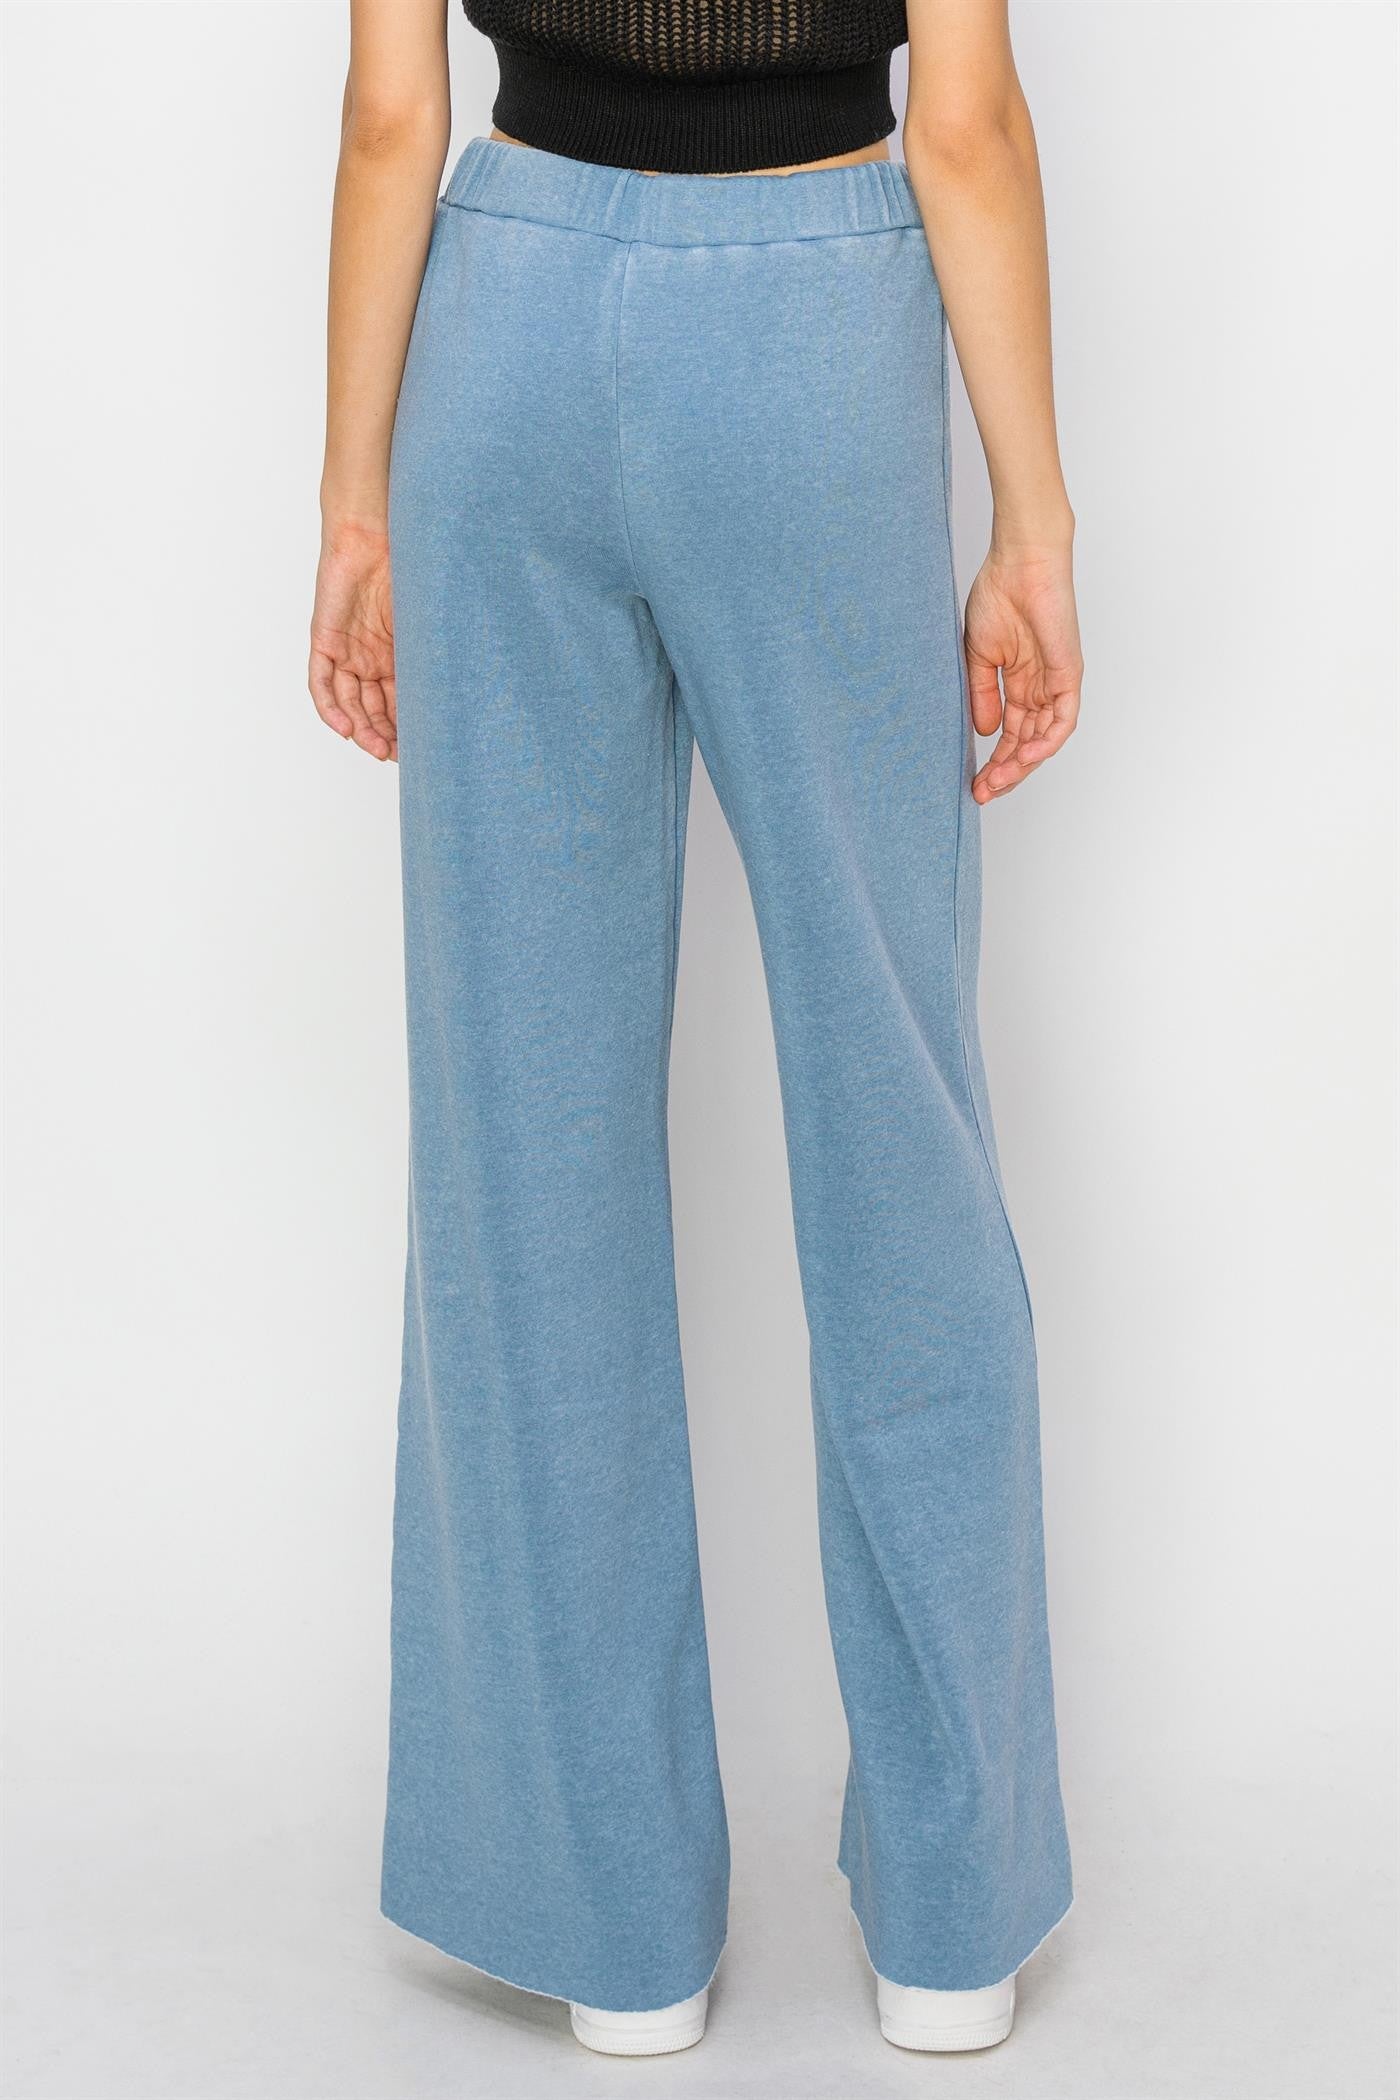 Pants - Flared Drawstring - Grey Blue-hotRAGS.com